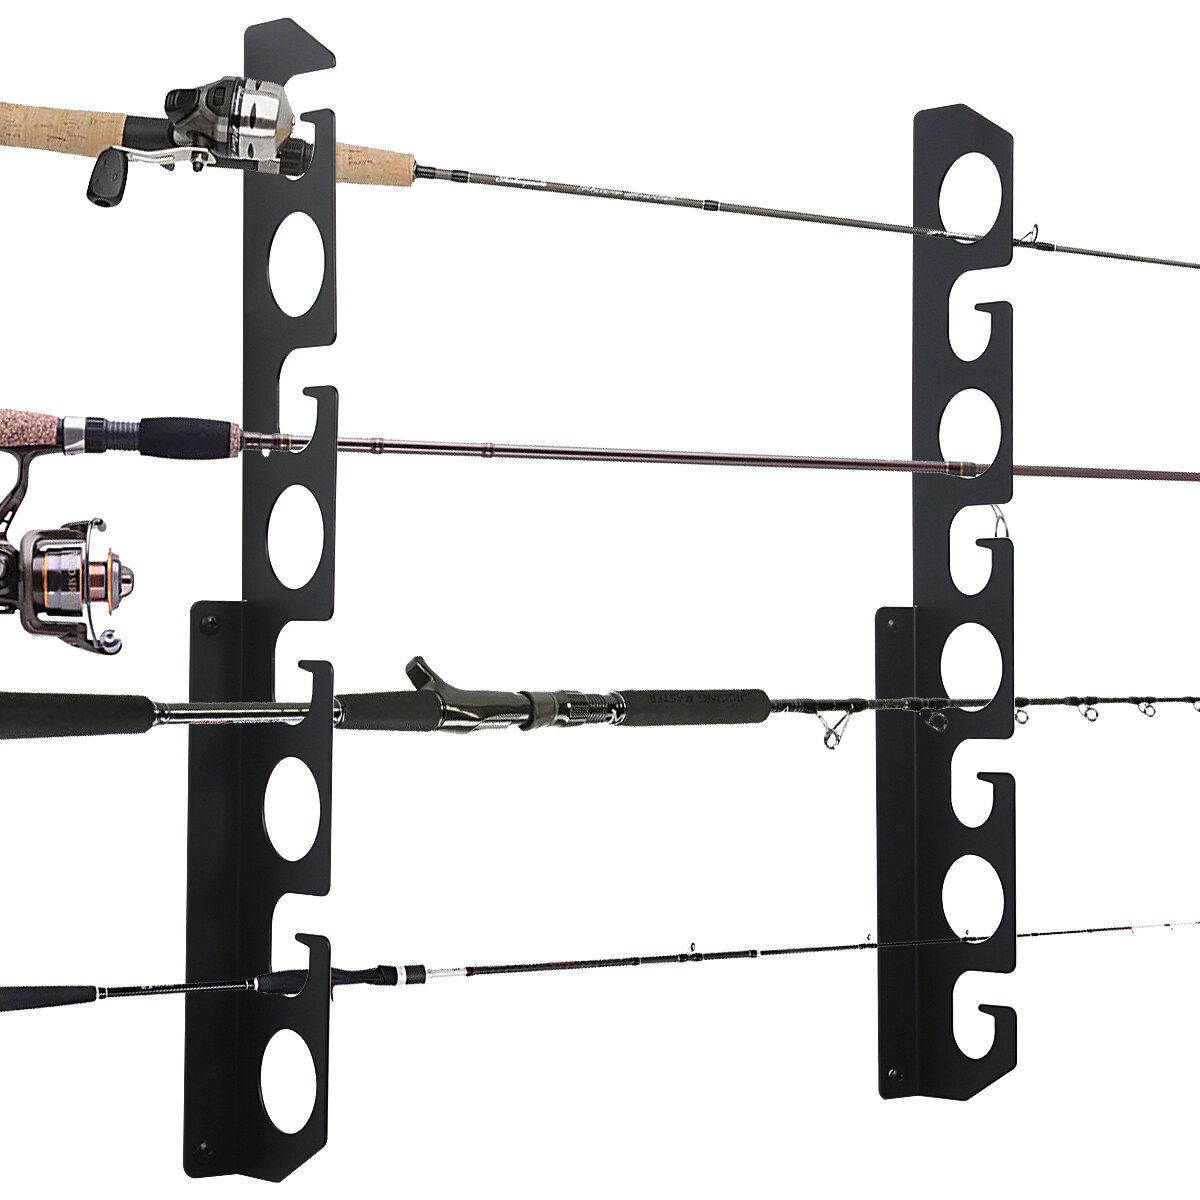 Fishing Rod Holder / Rack - Wall mounted 10 Rods Pole Stand Shelf